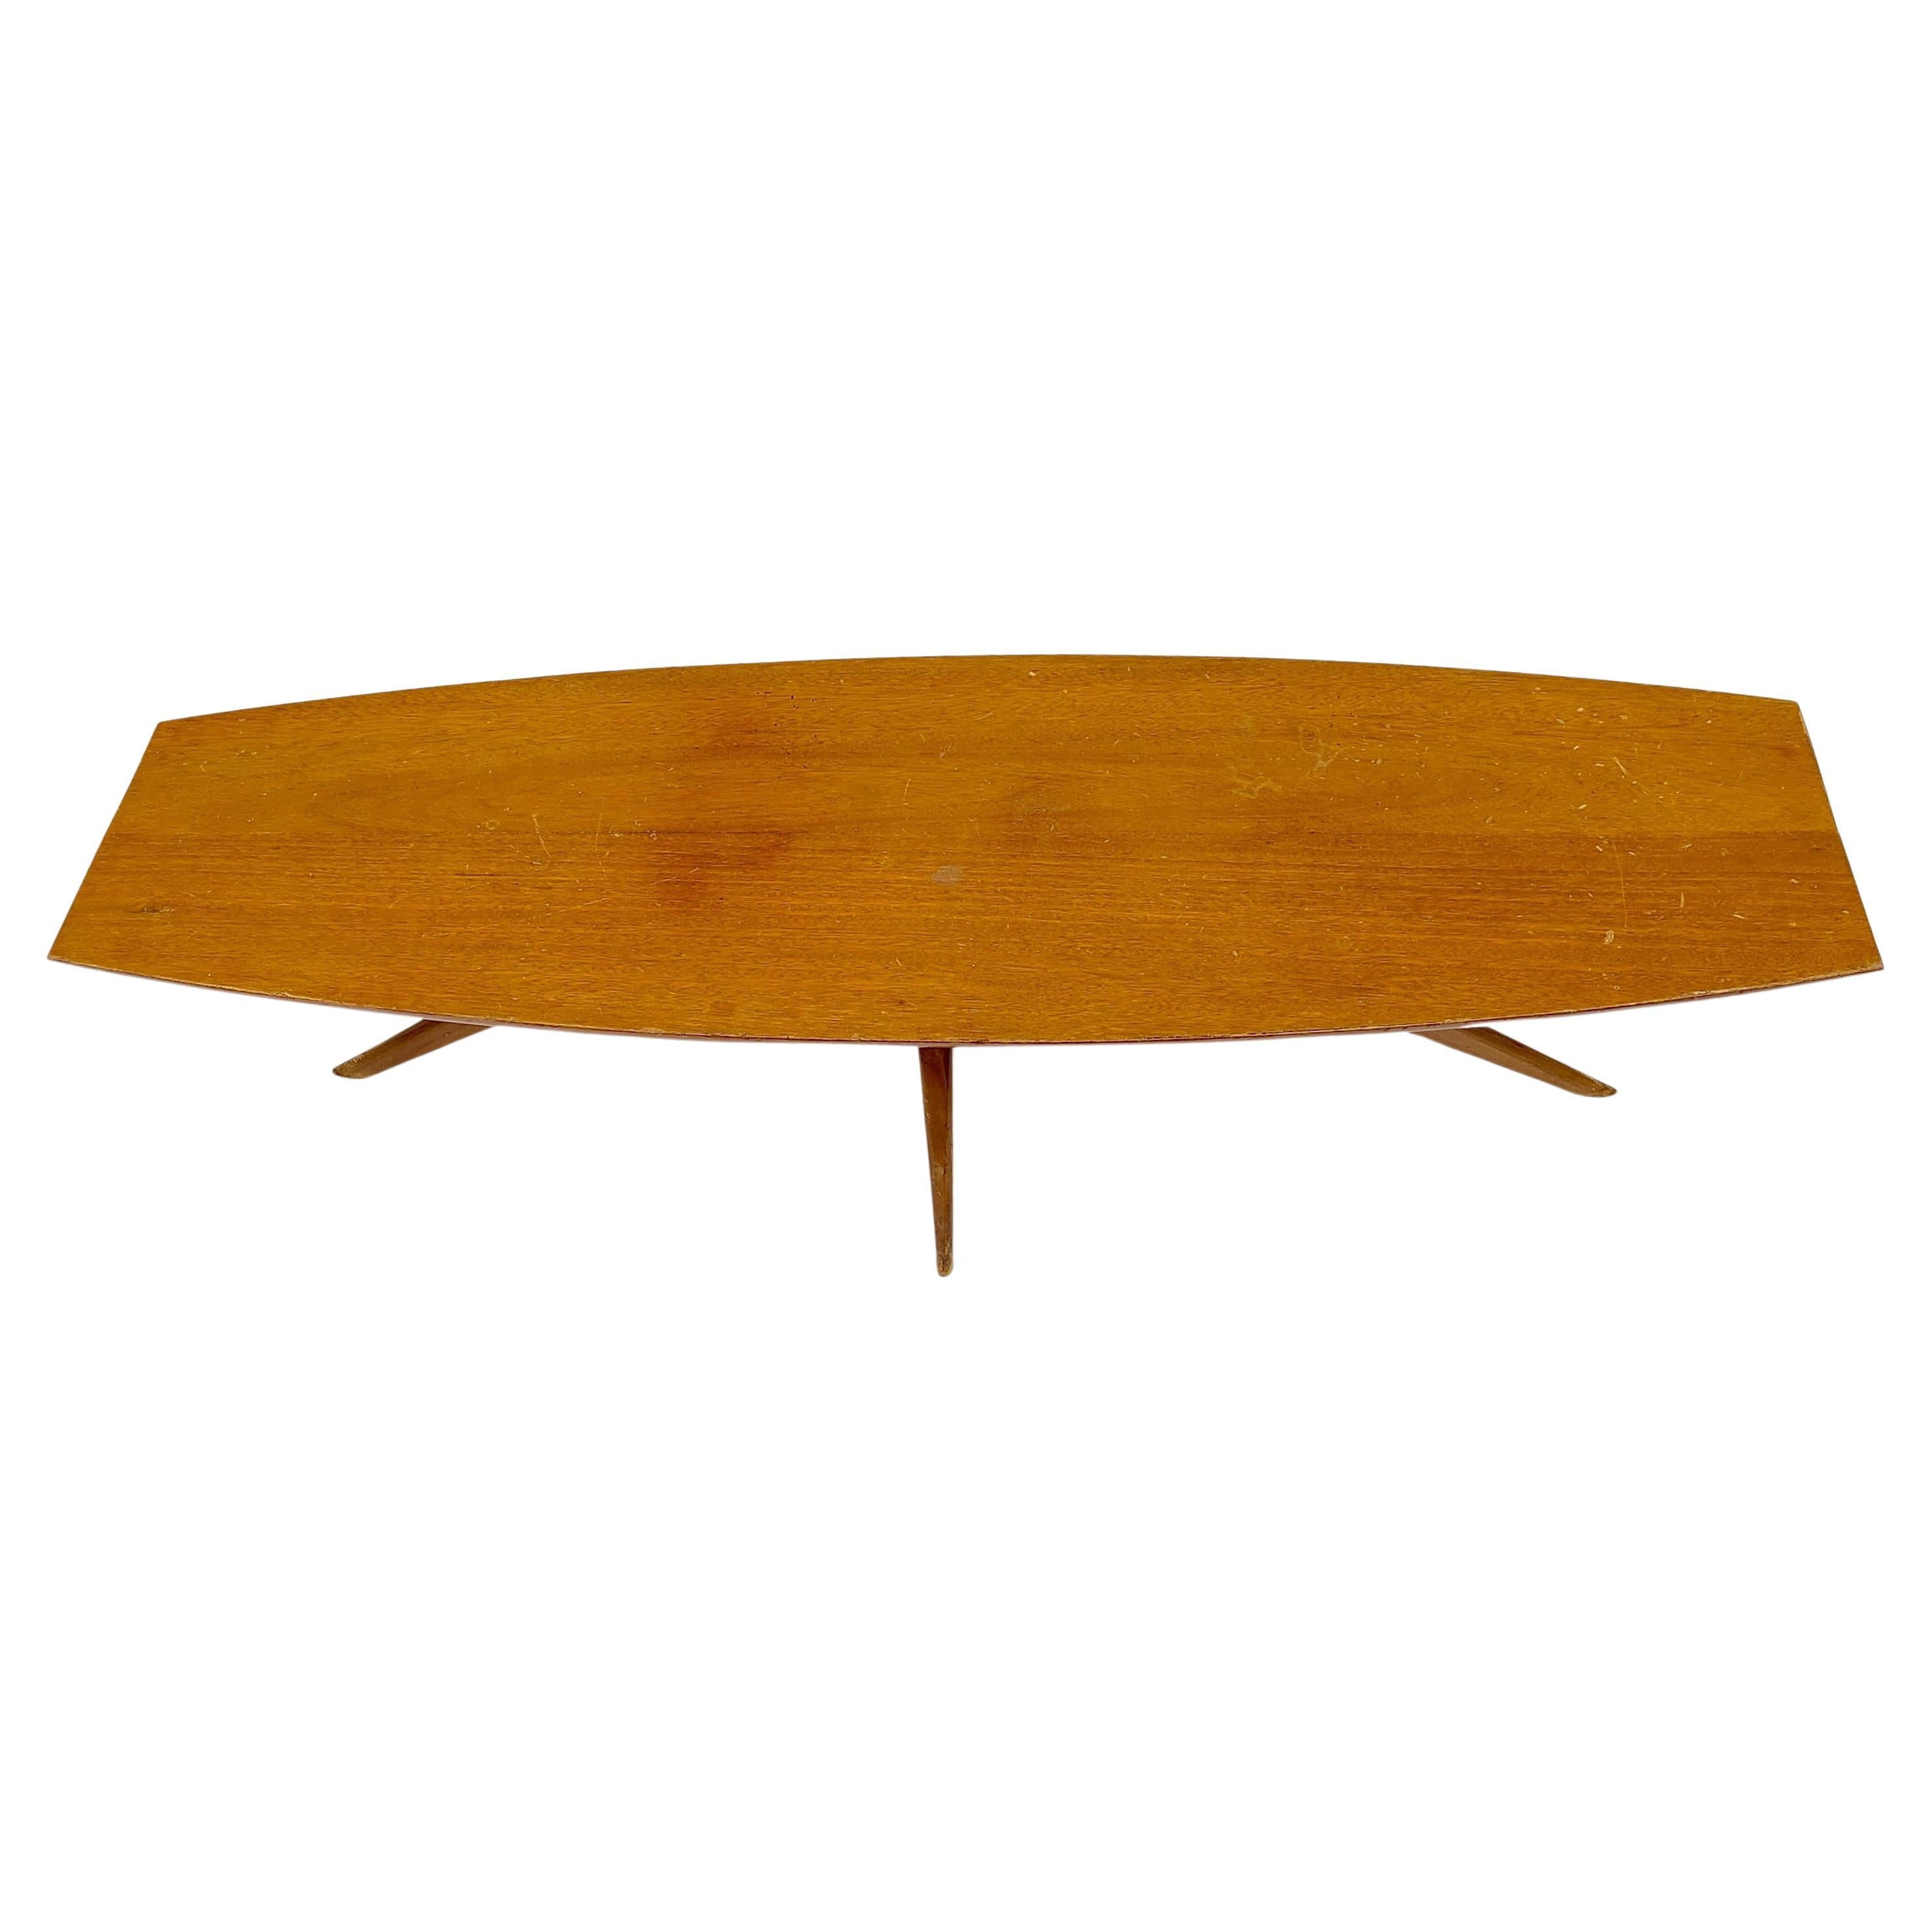 Mid-20th Century Studiocraft Surfboard Coffee Table Paul Laszlo